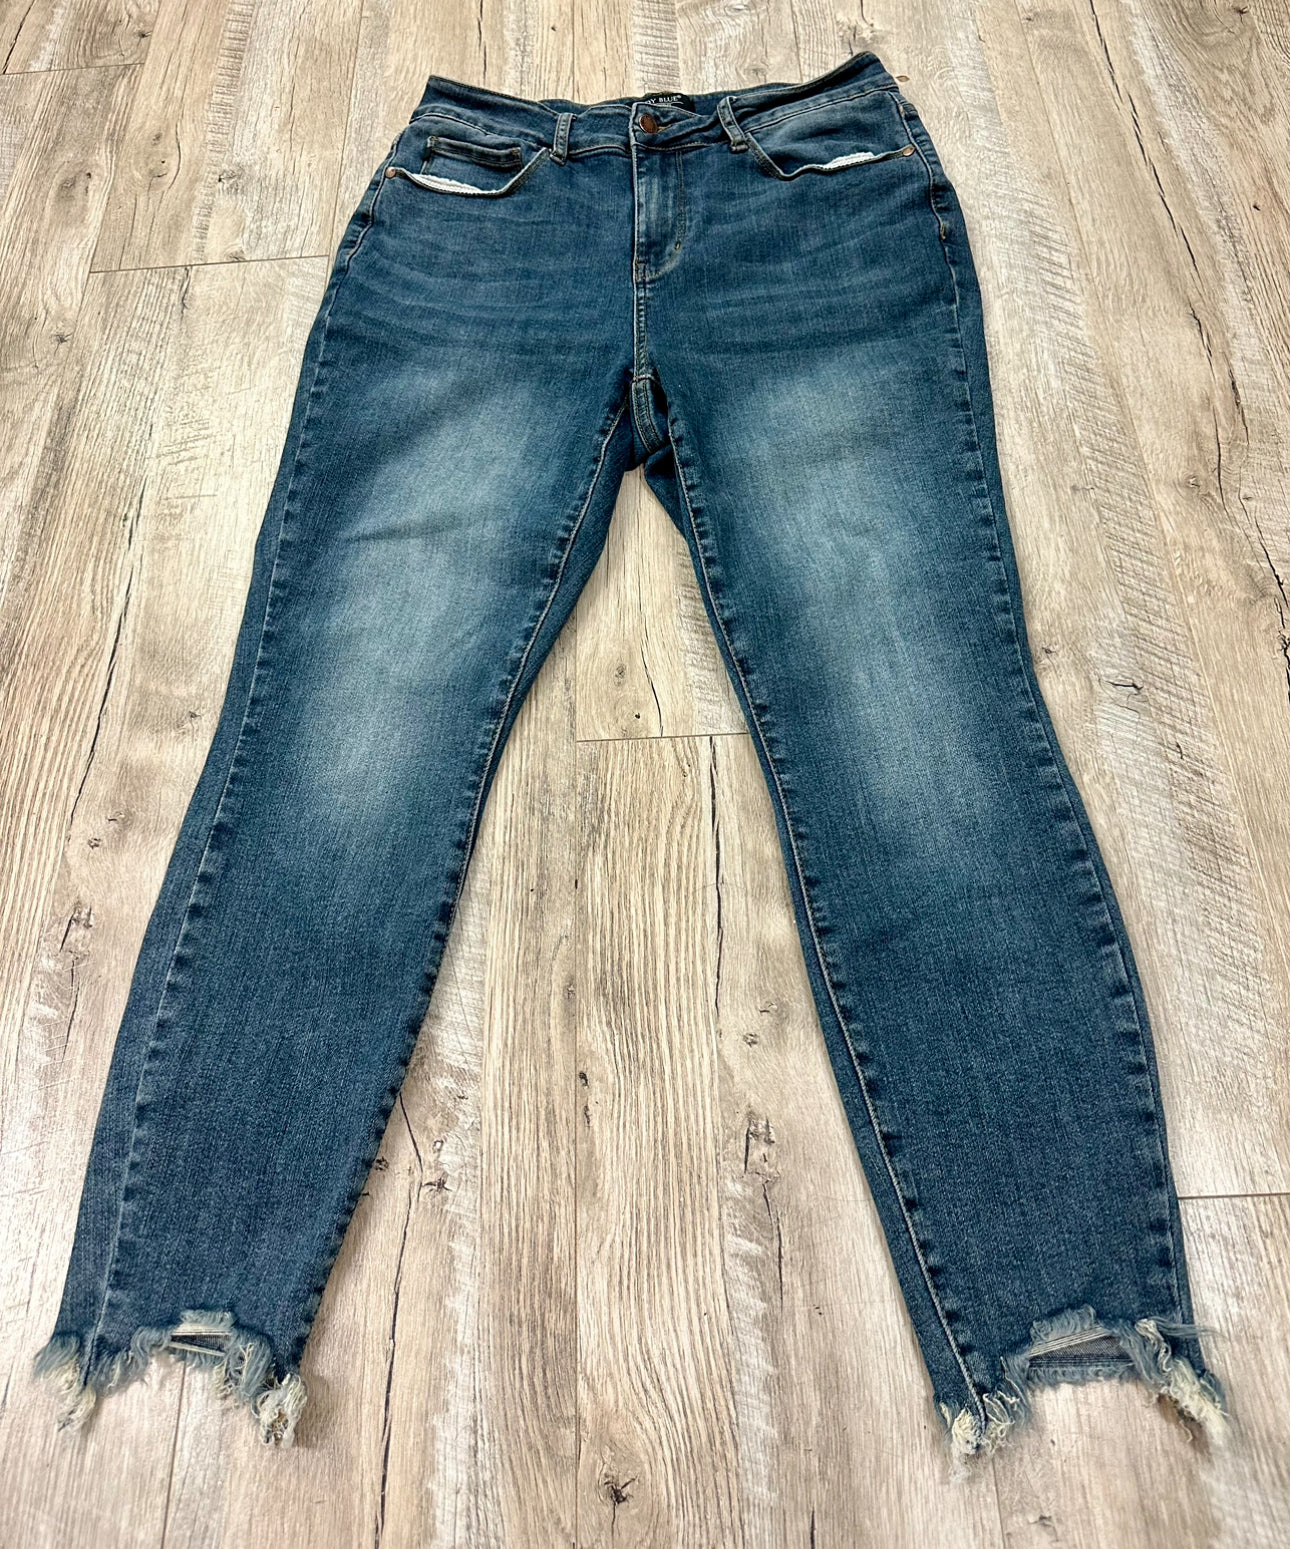 Women's Judy Blue Distressed Jeans Size 14W - Skinny Fit